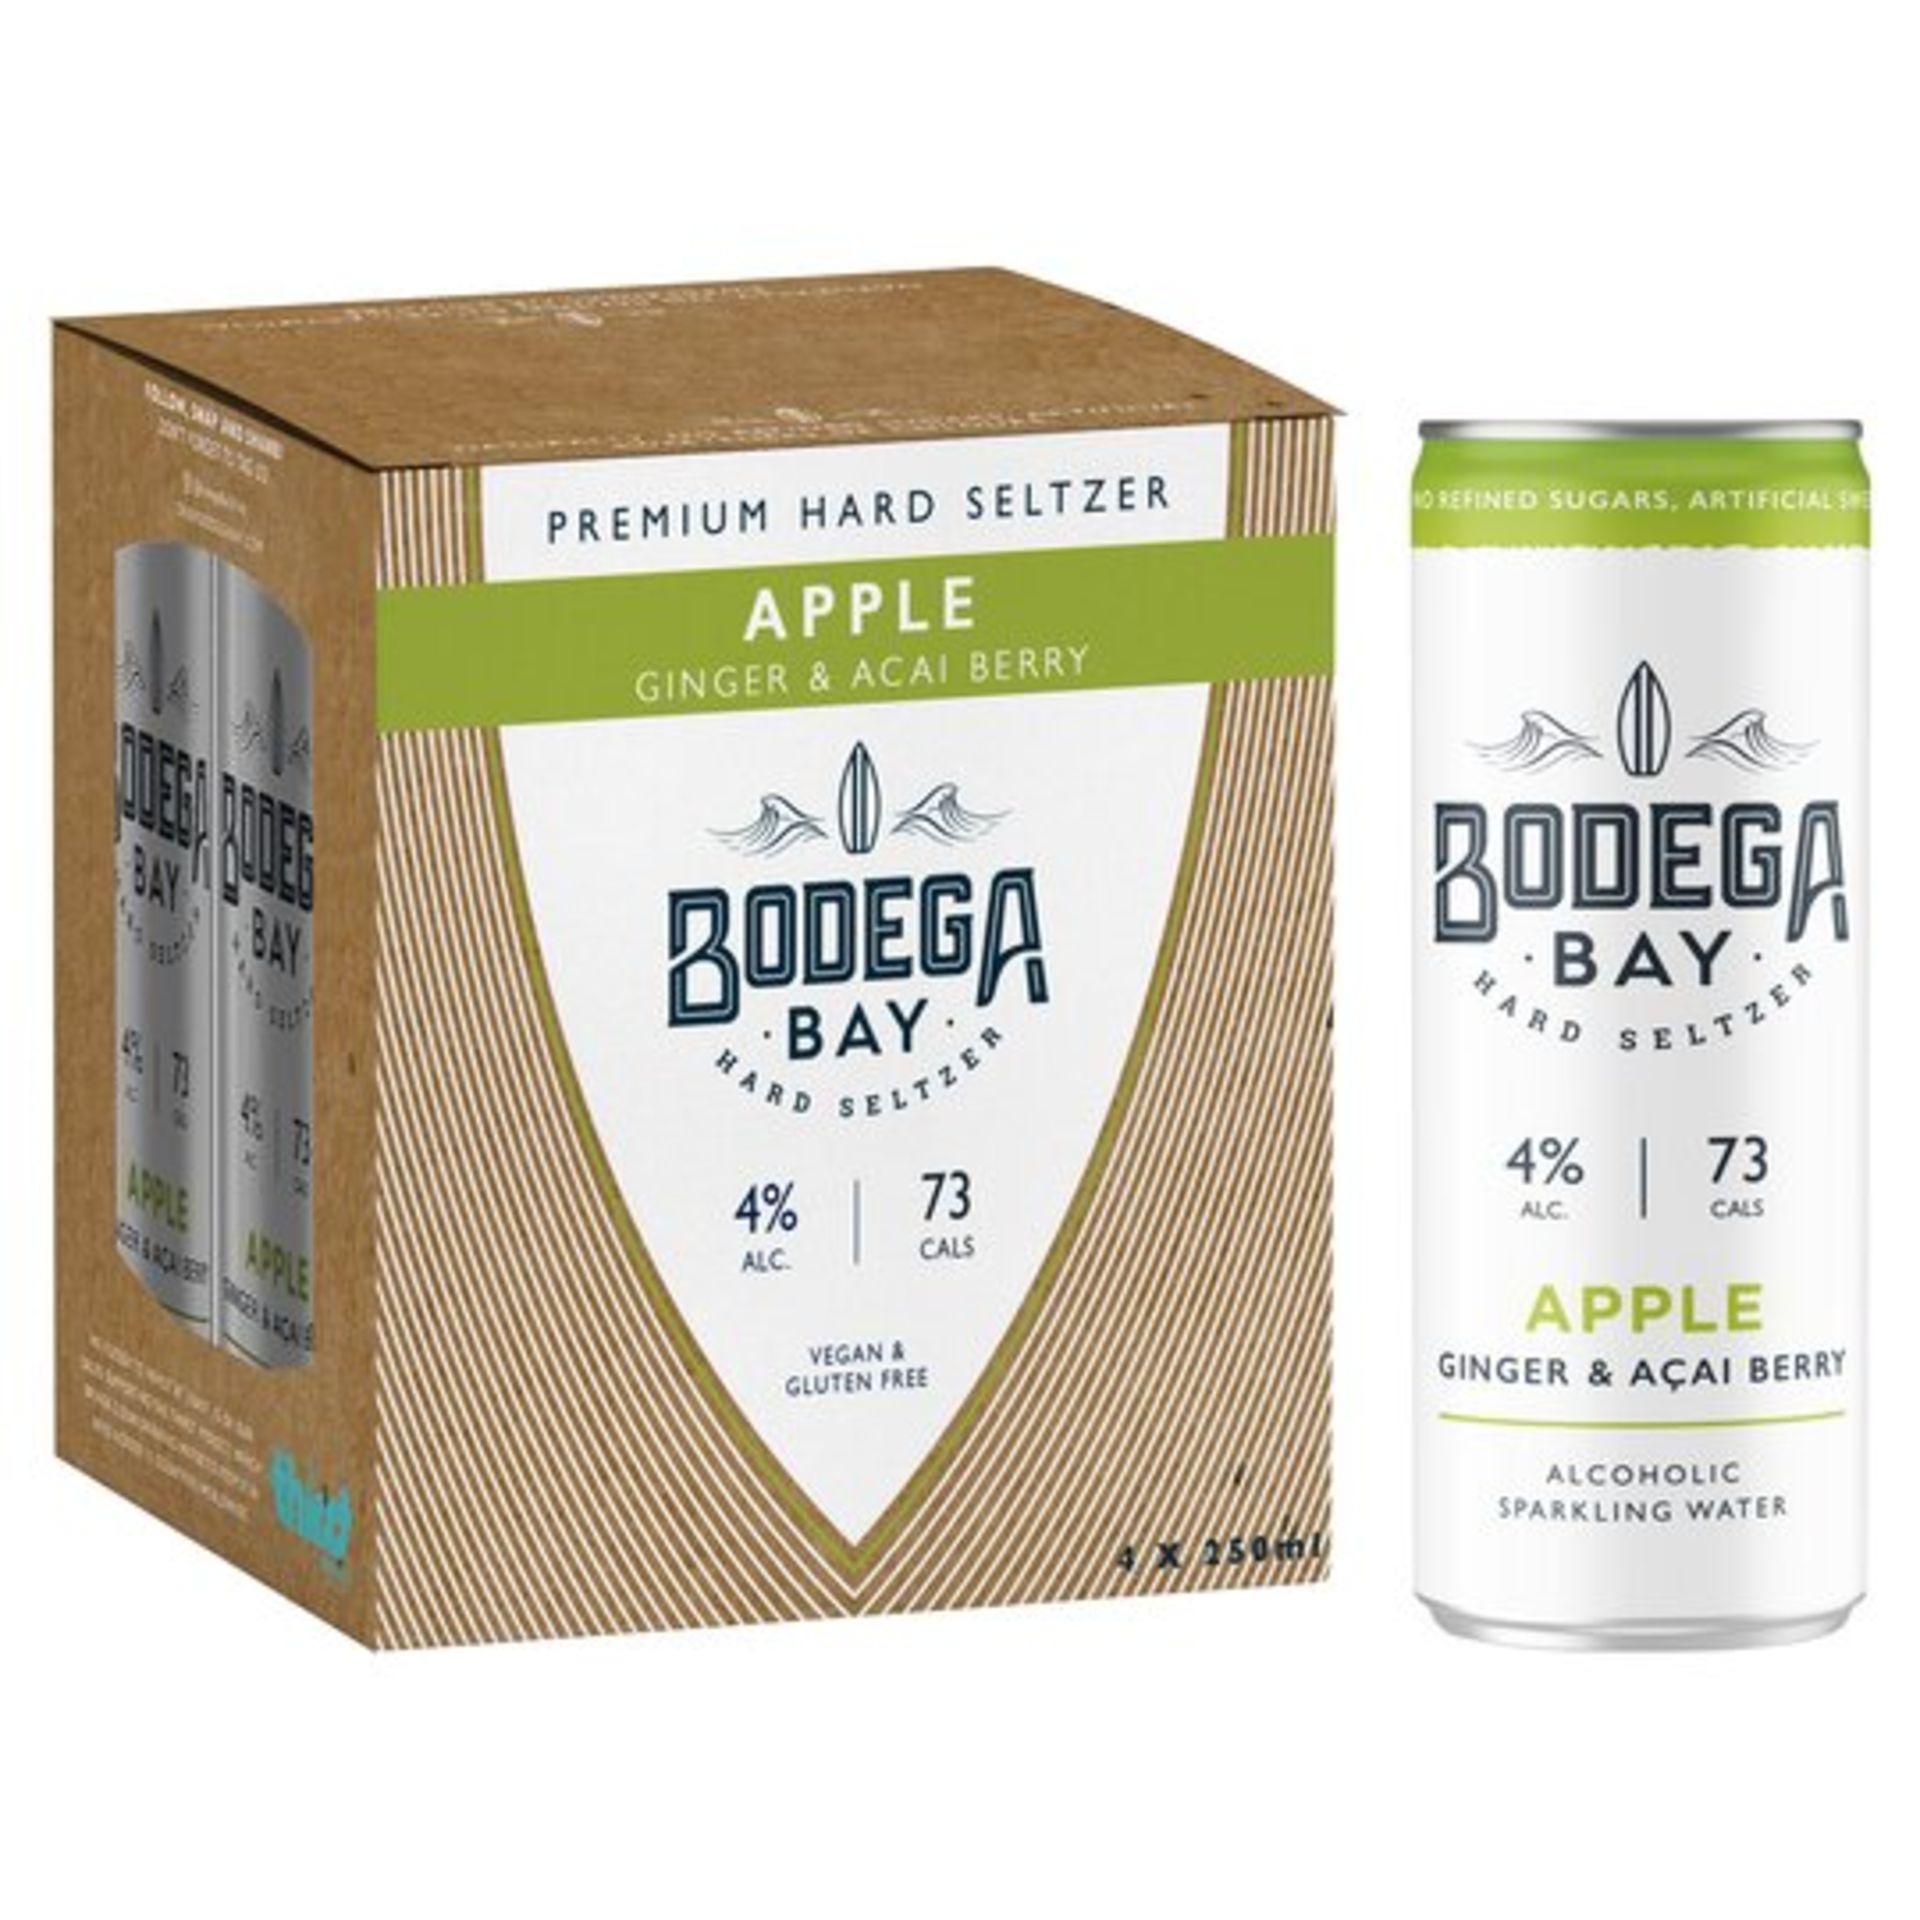 24 x Bodega Bay Hard Seltzer 250ml Alcoholic Sparkling Water Drinks - Apple Ginger & Acai Berry - Image 5 of 11